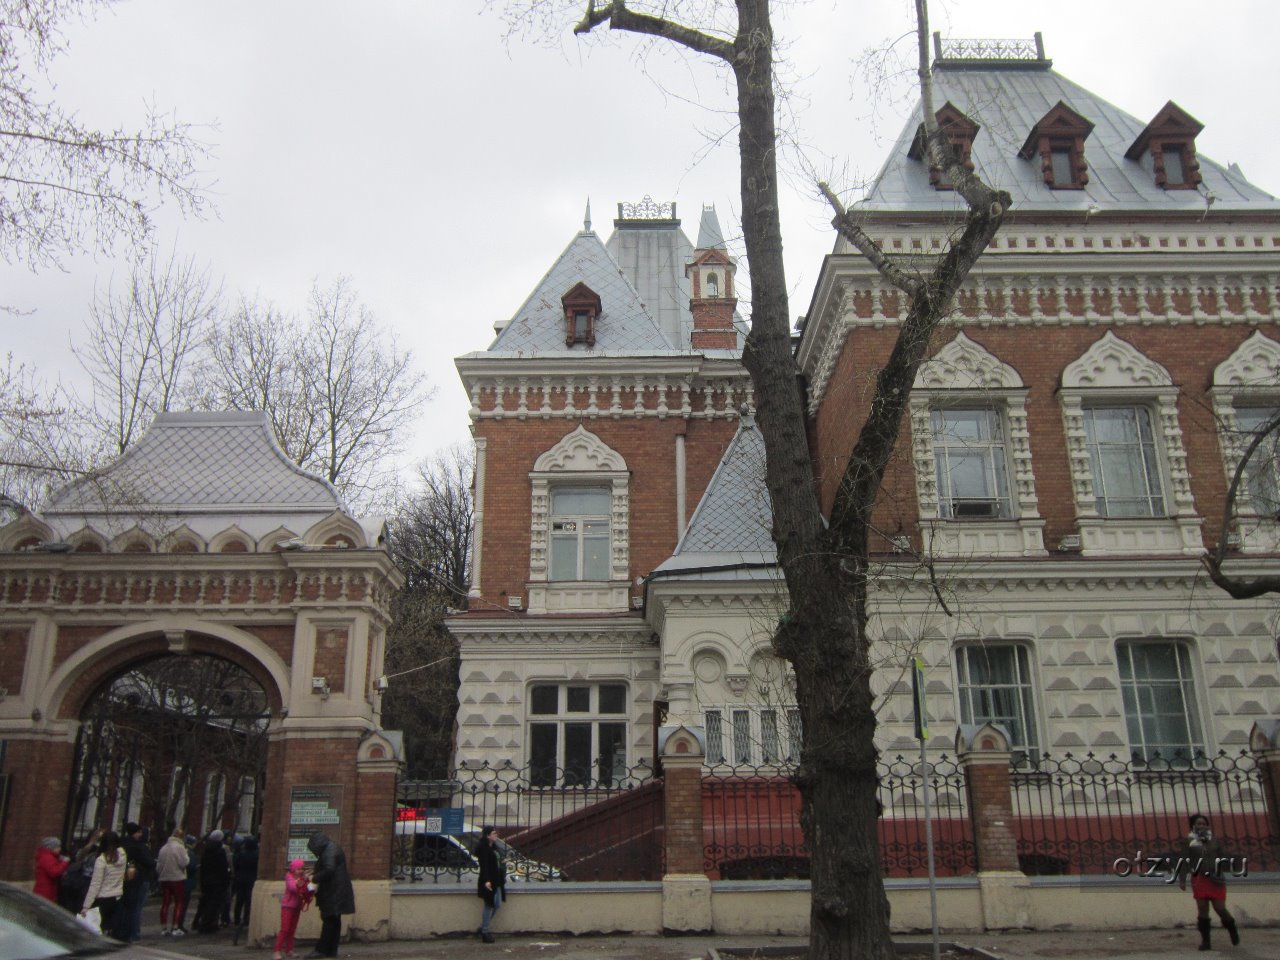 Музей тимирязевский